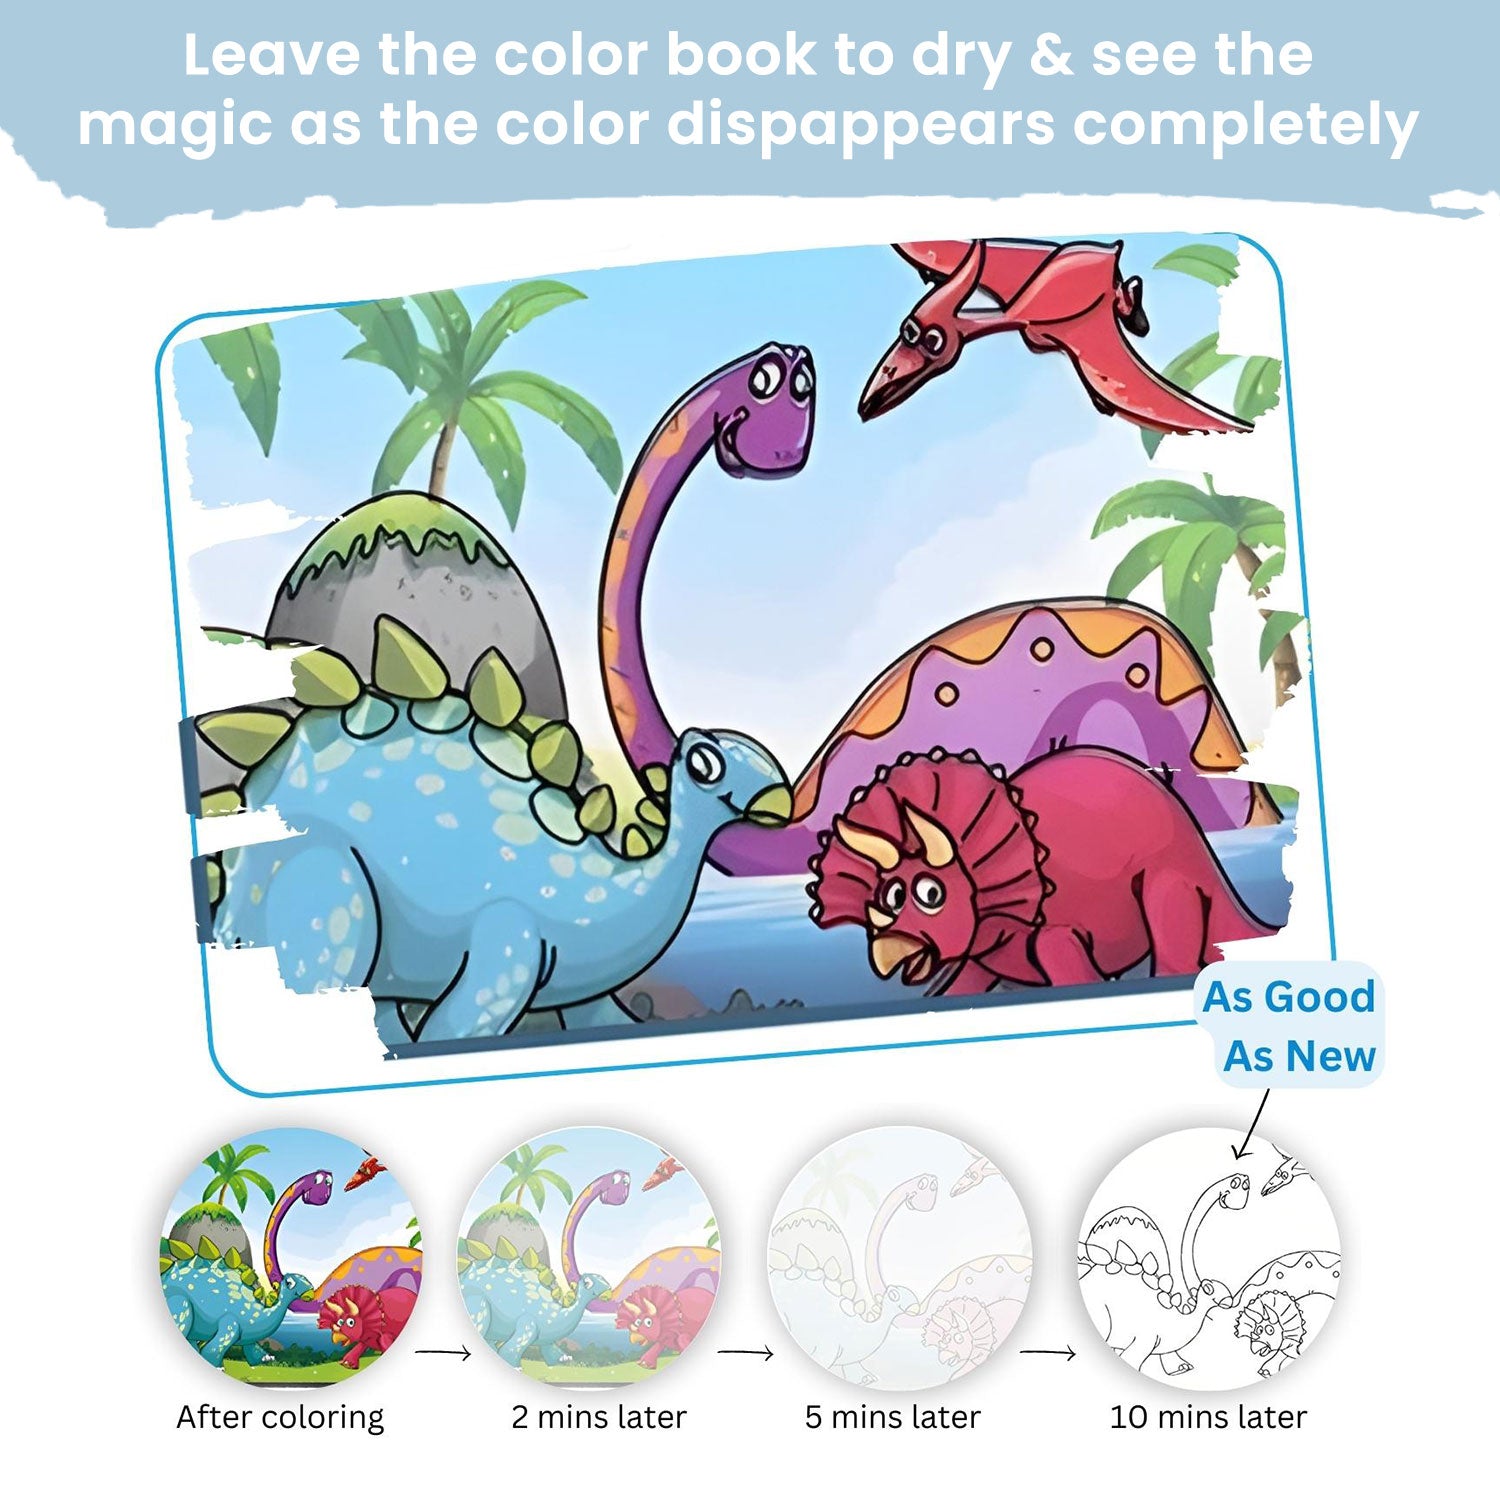 Baby Moo Dinosaur World Reusable Magic Water Colouring Book - Orange